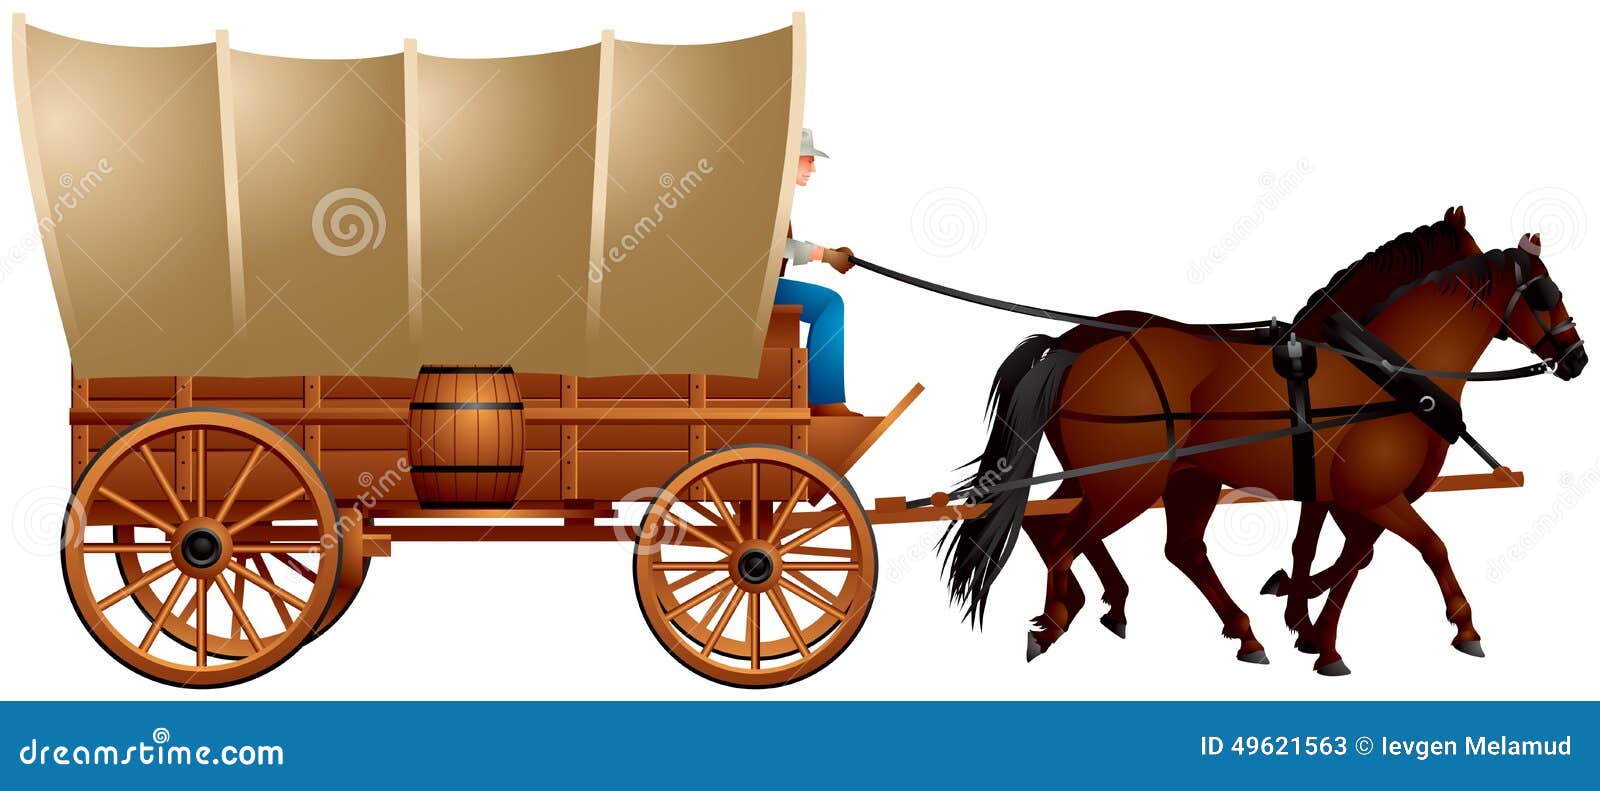 horse wagon clipart - photo #24